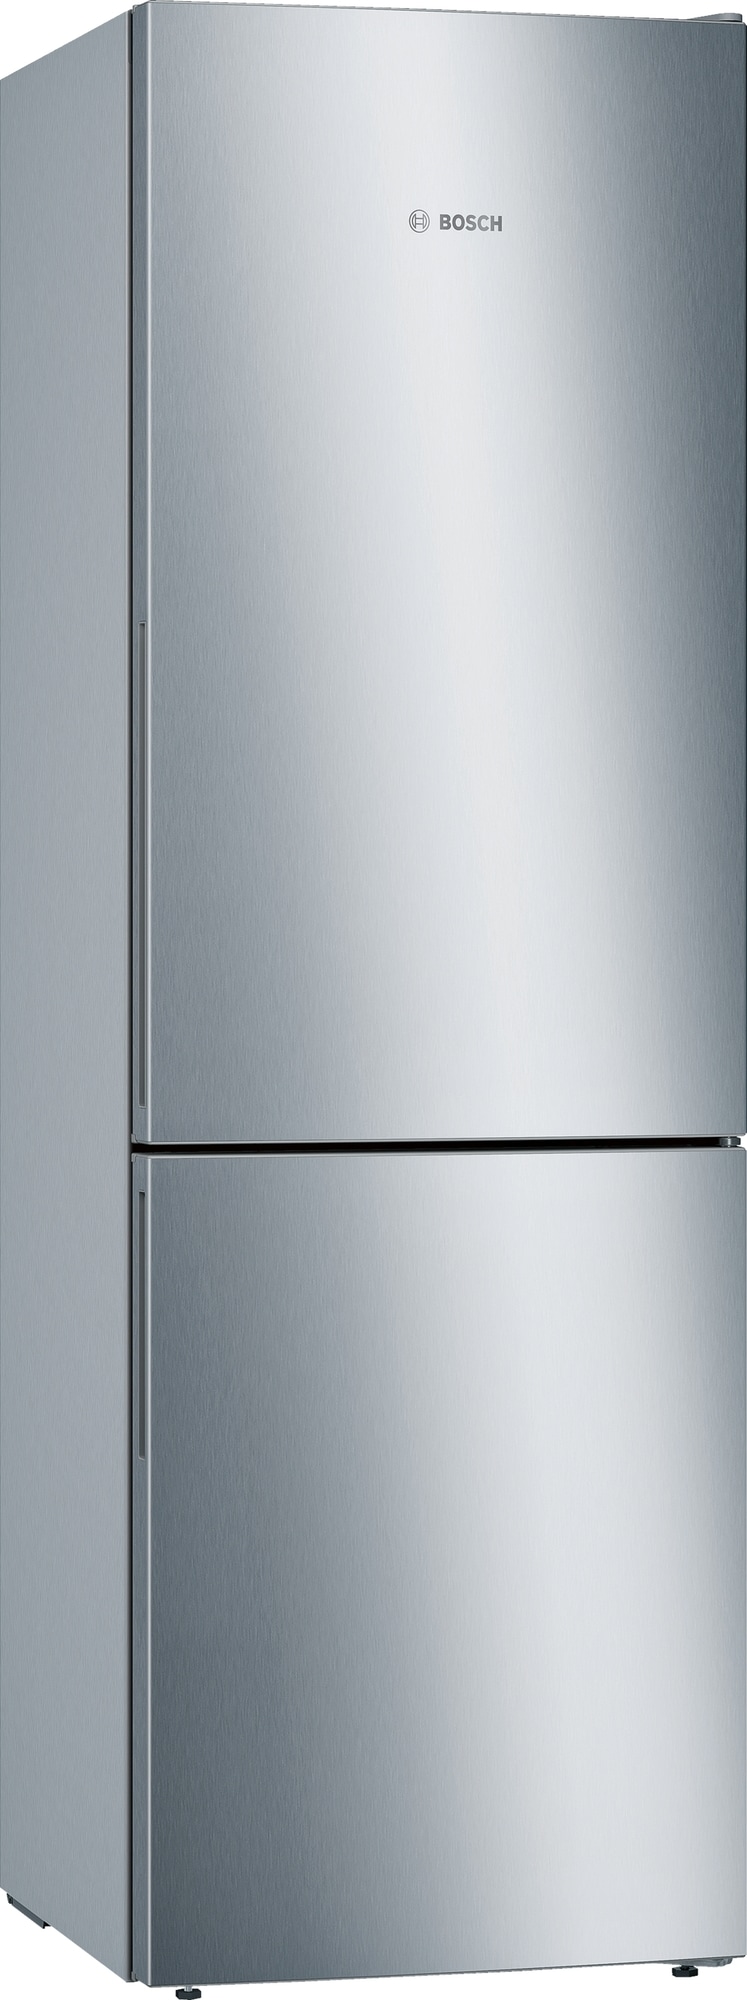 Bosch Series 6 køleskab og fryser KGE36AICA thumbnail